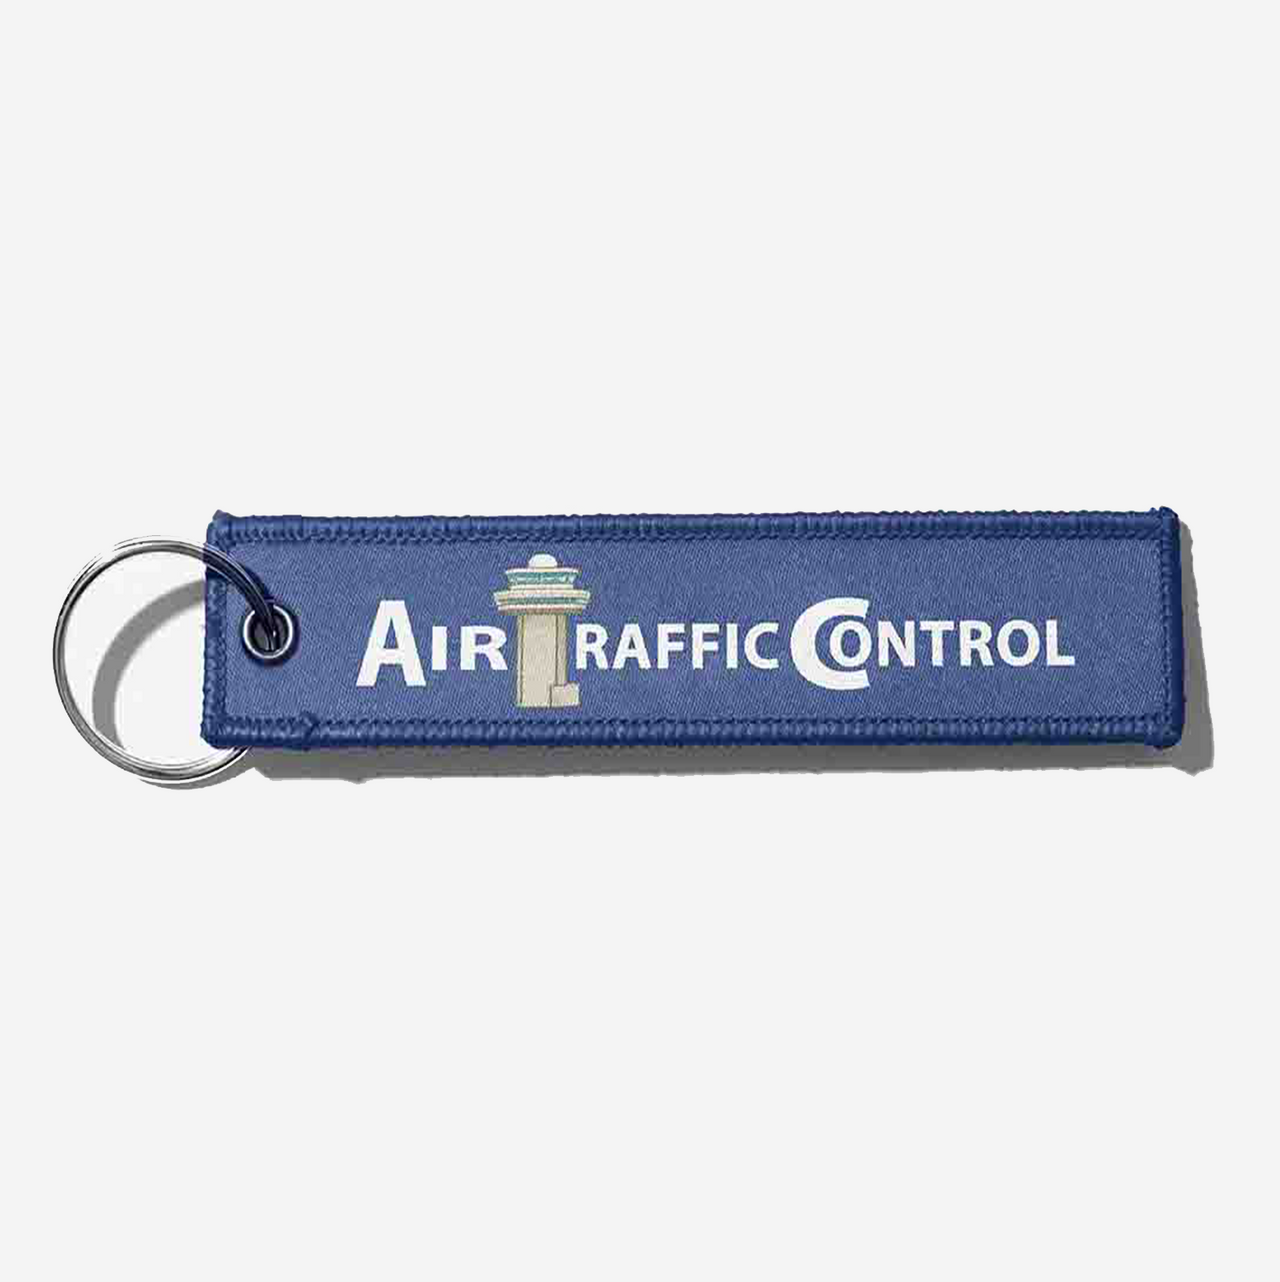 Air Traffic Control Designed Key Chains